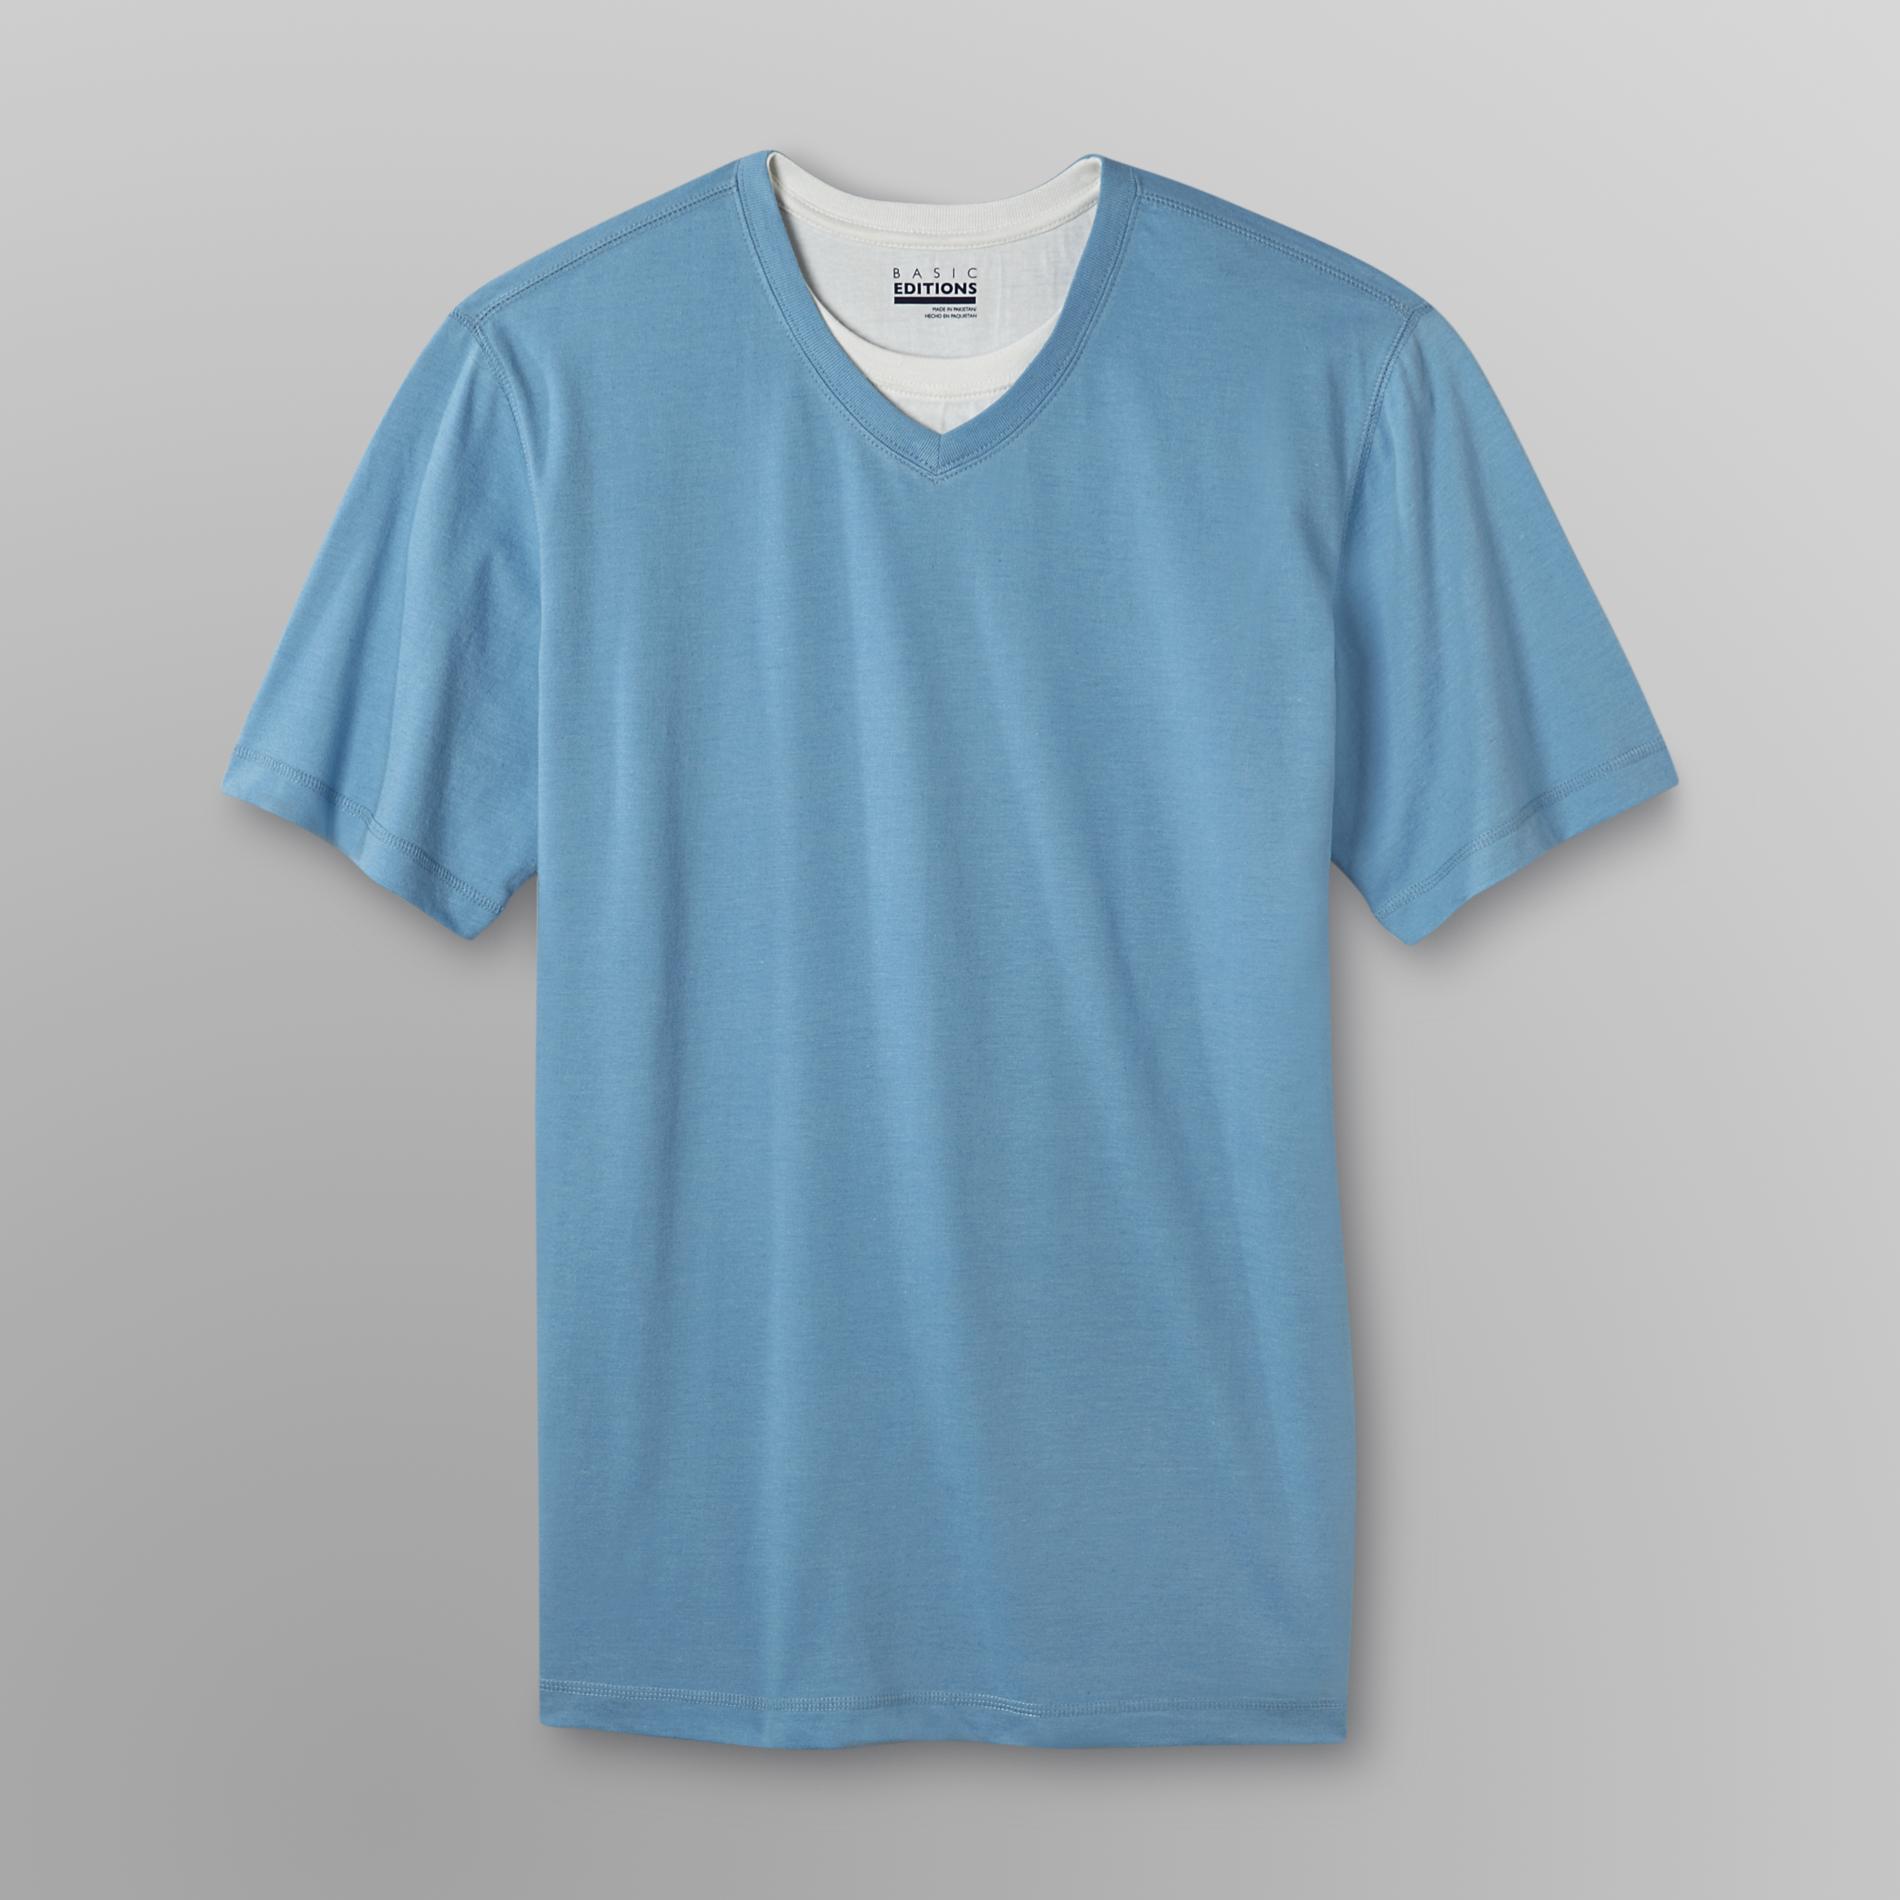 Basic Editions Men's Layered V-Neck T-Shirt